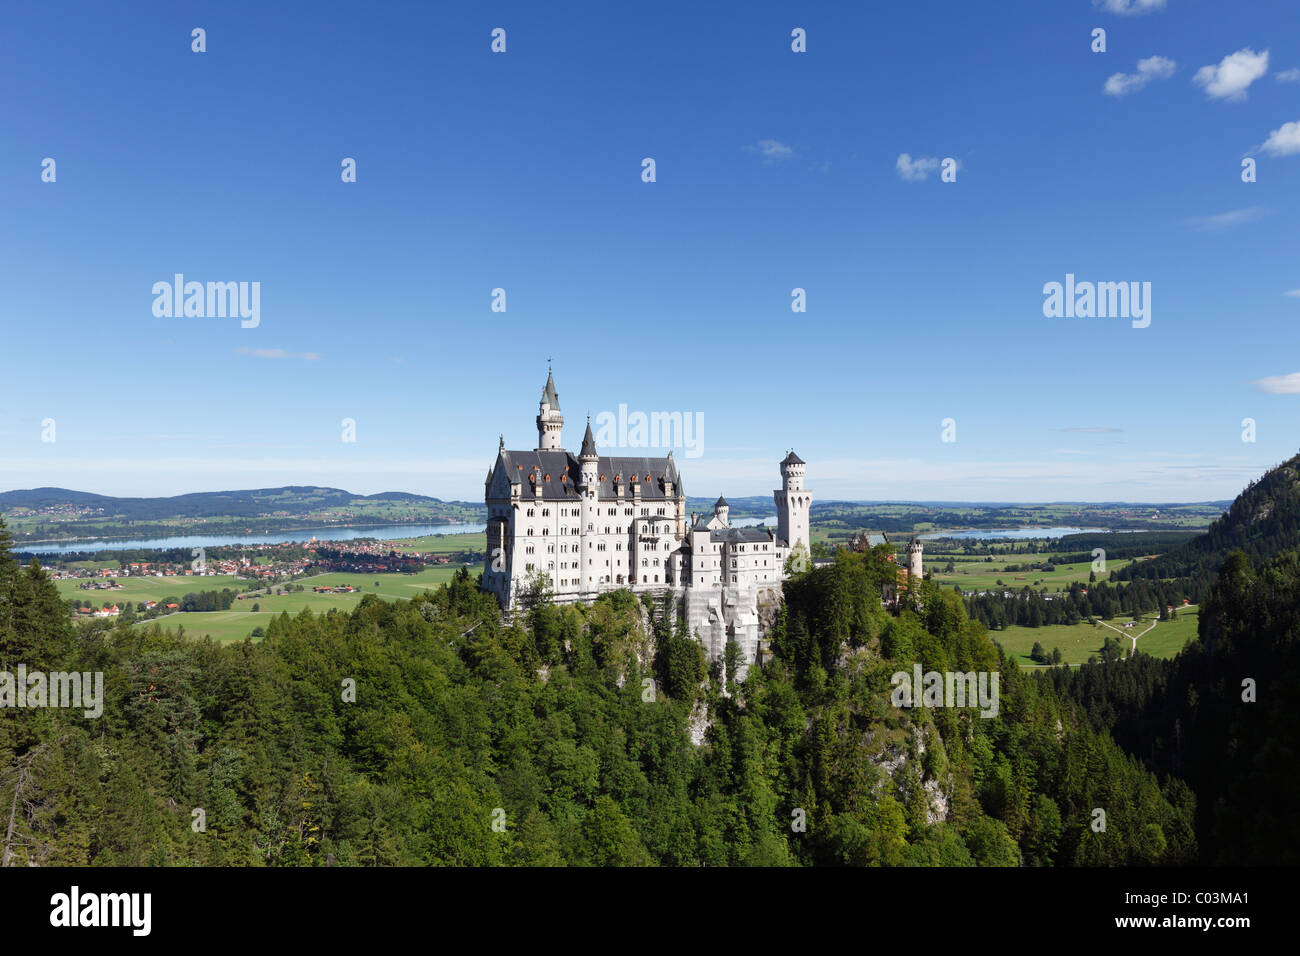 Avis de Mary's Bridge, Schloss Neuschwanstein Castle, Ostallgaeu, Schwaben, Allgaeu, Bavaria, Germany, Europe Banque D'Images